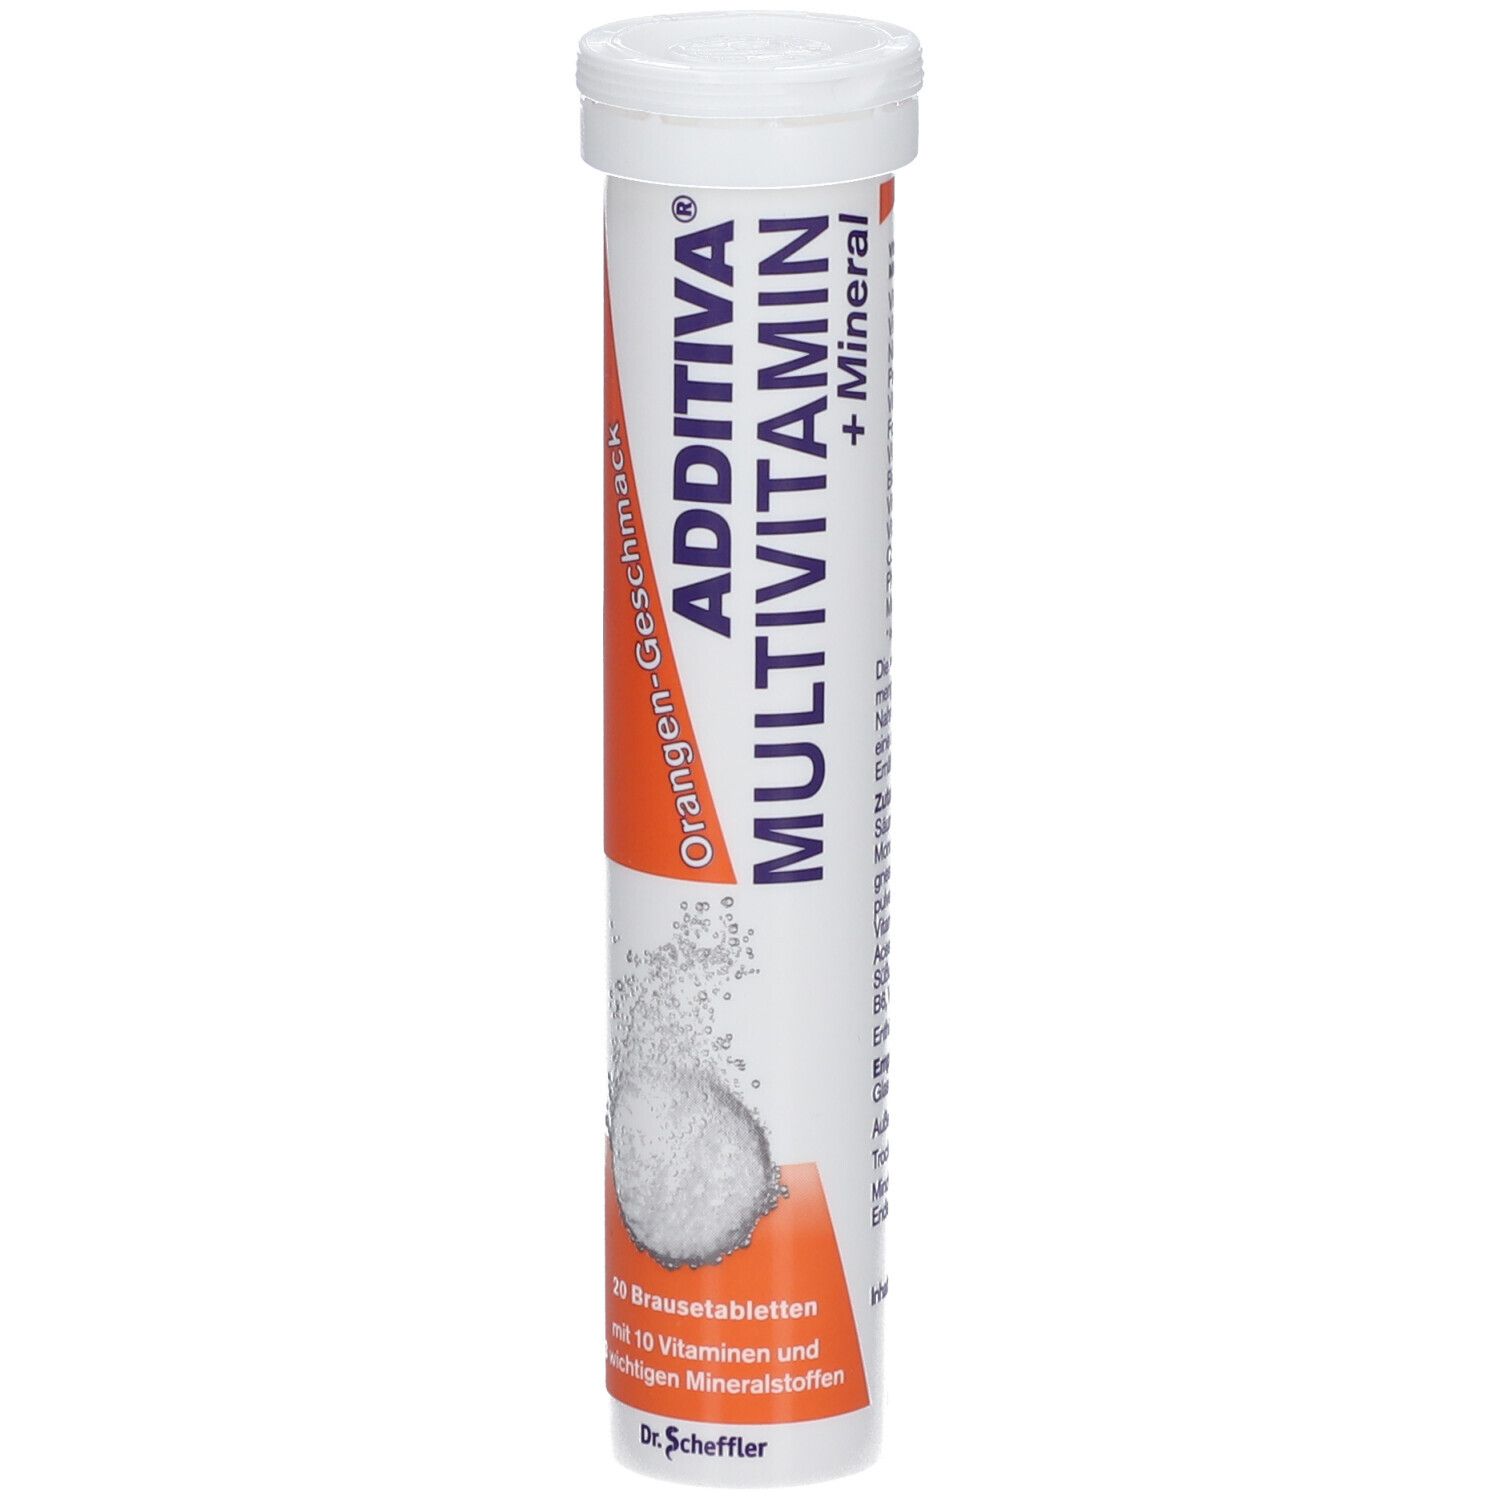 Image of ADDITIVA® Multivitamin + Mineral Orangen-Geschmack